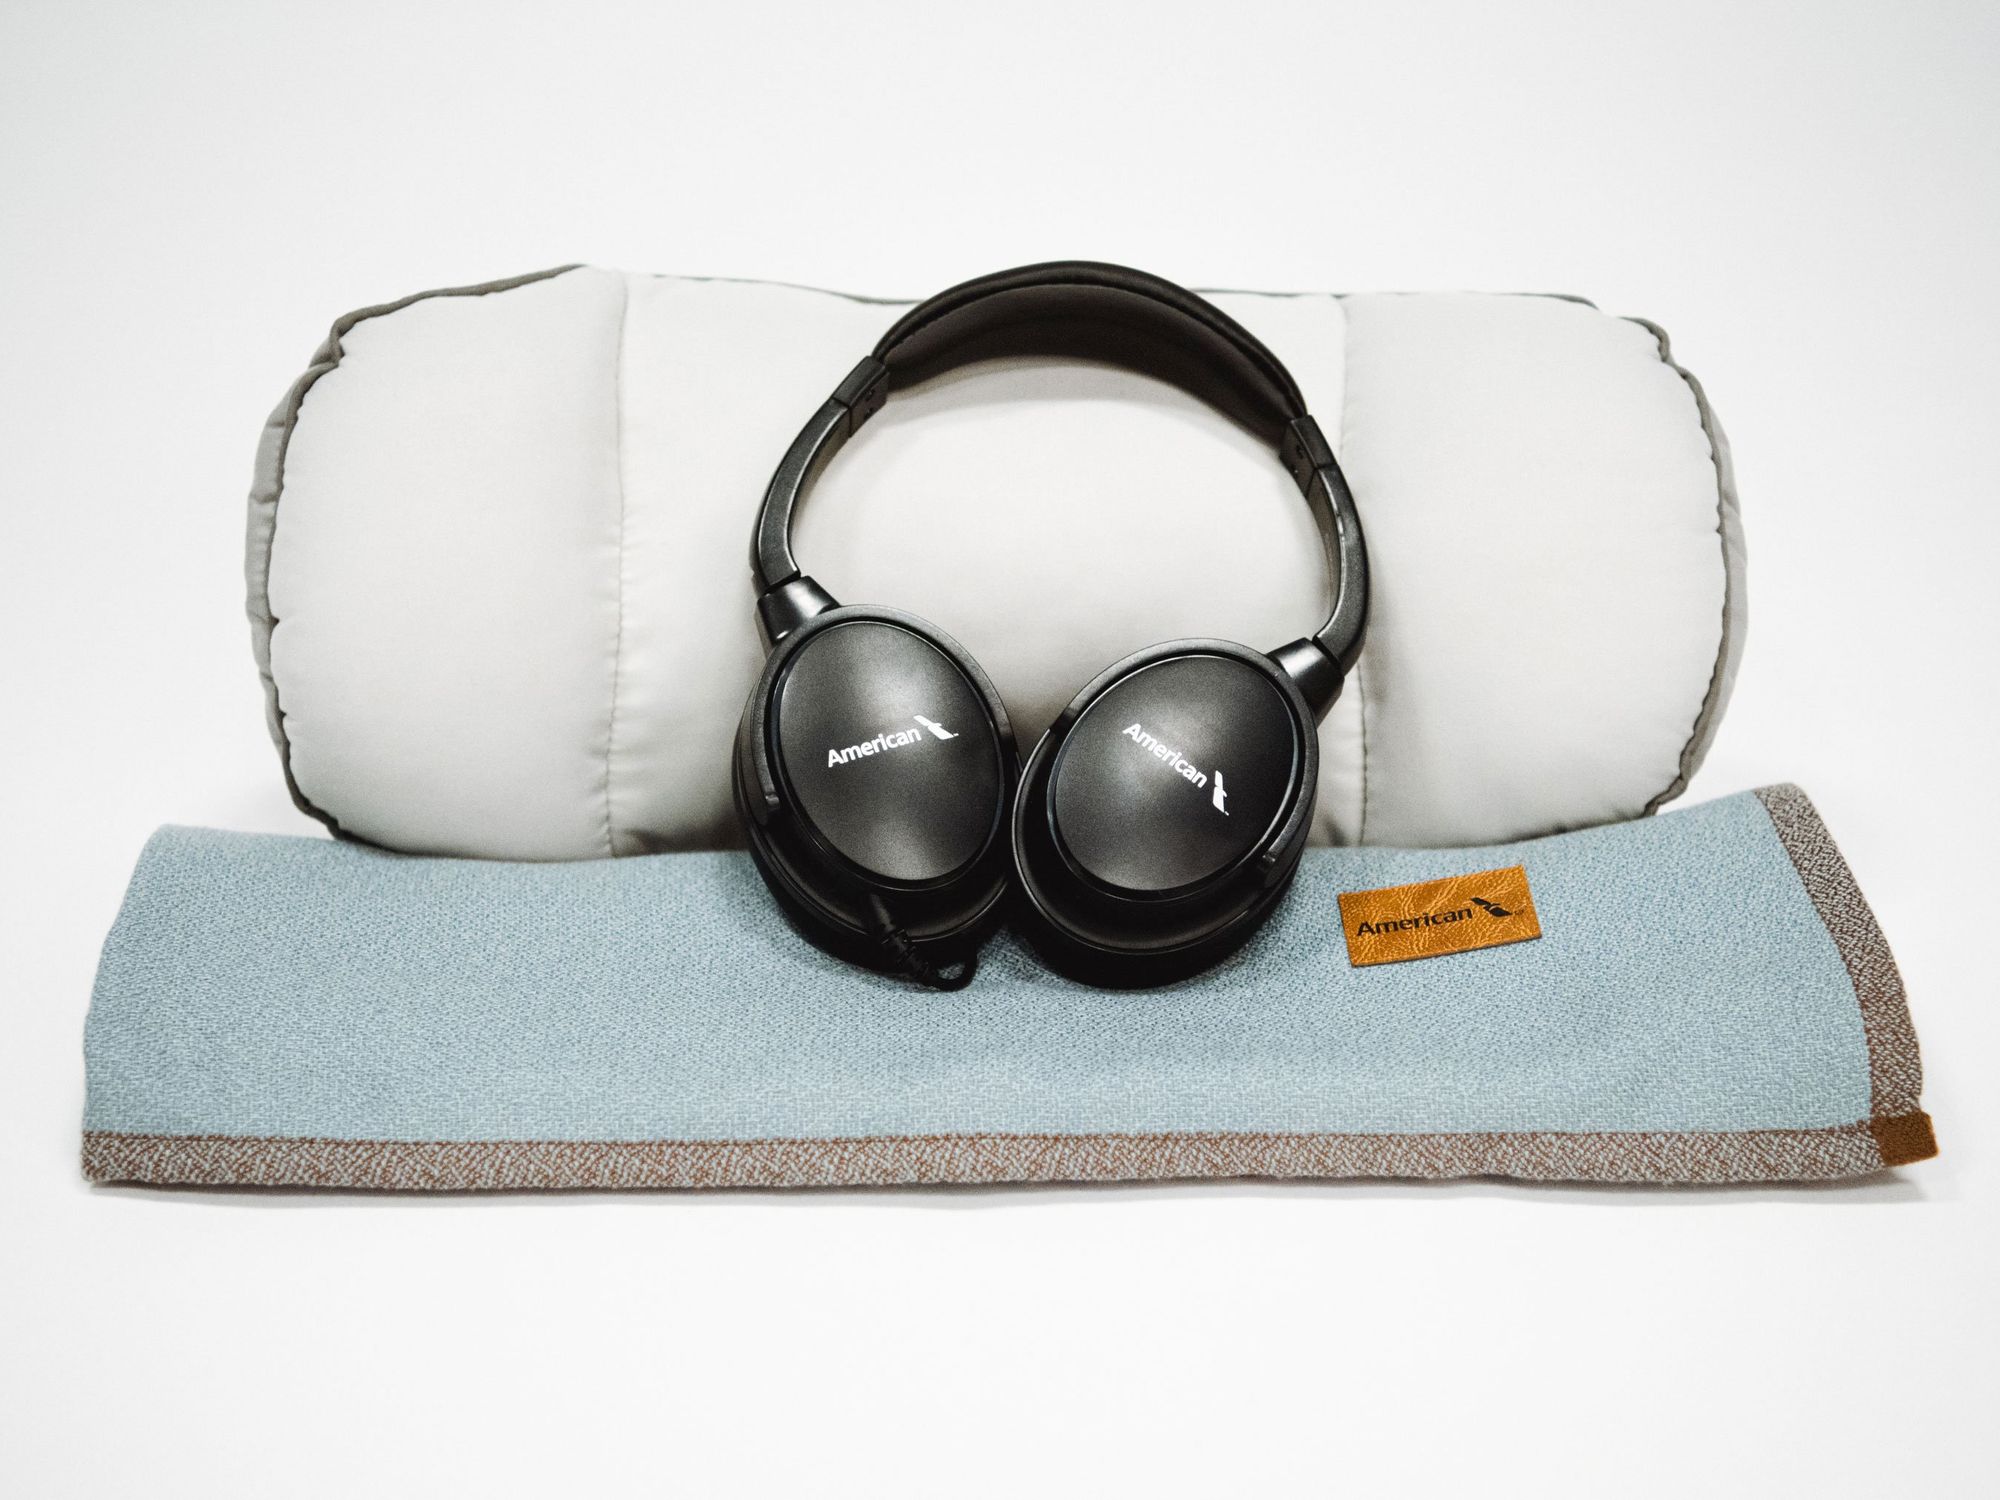 American Airlines pillow headphones